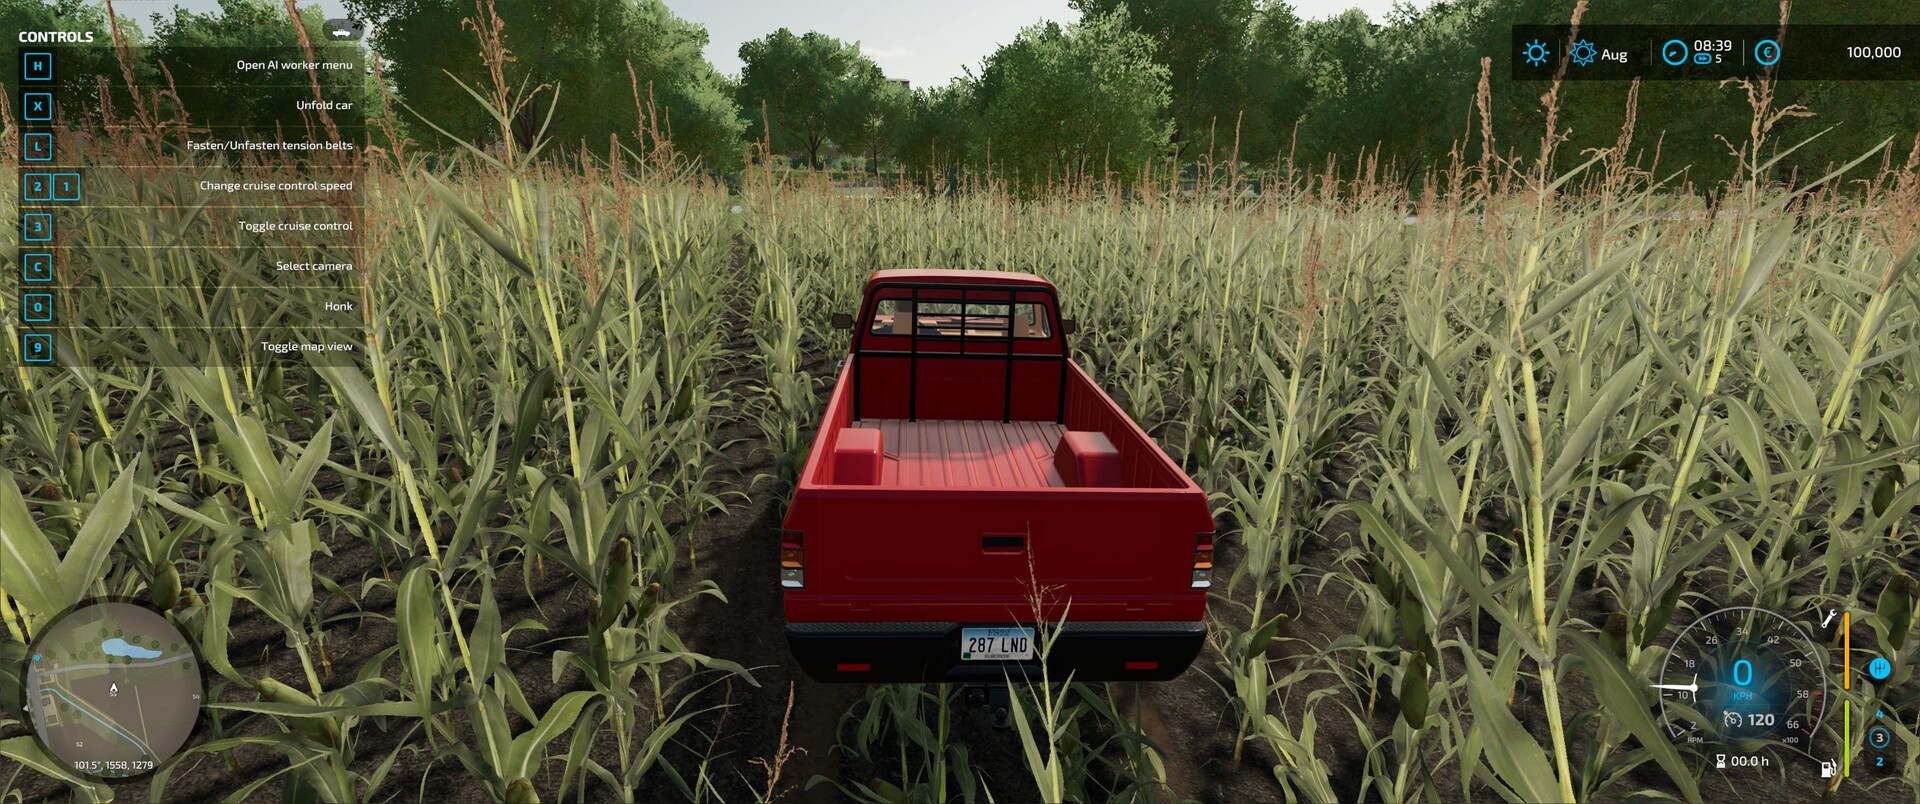 Farming Simulator 22 - Análise